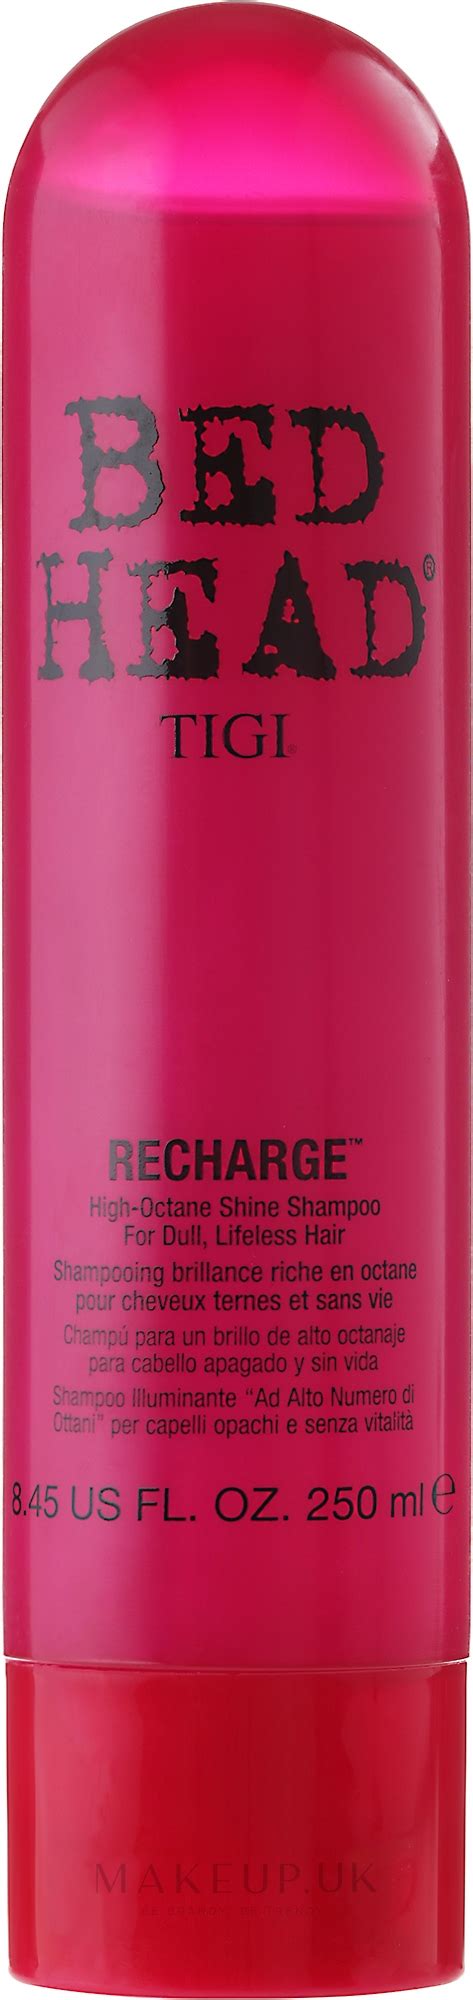 Tigi Bed Head Recharge High Octane Shine Shampoo Strengthening